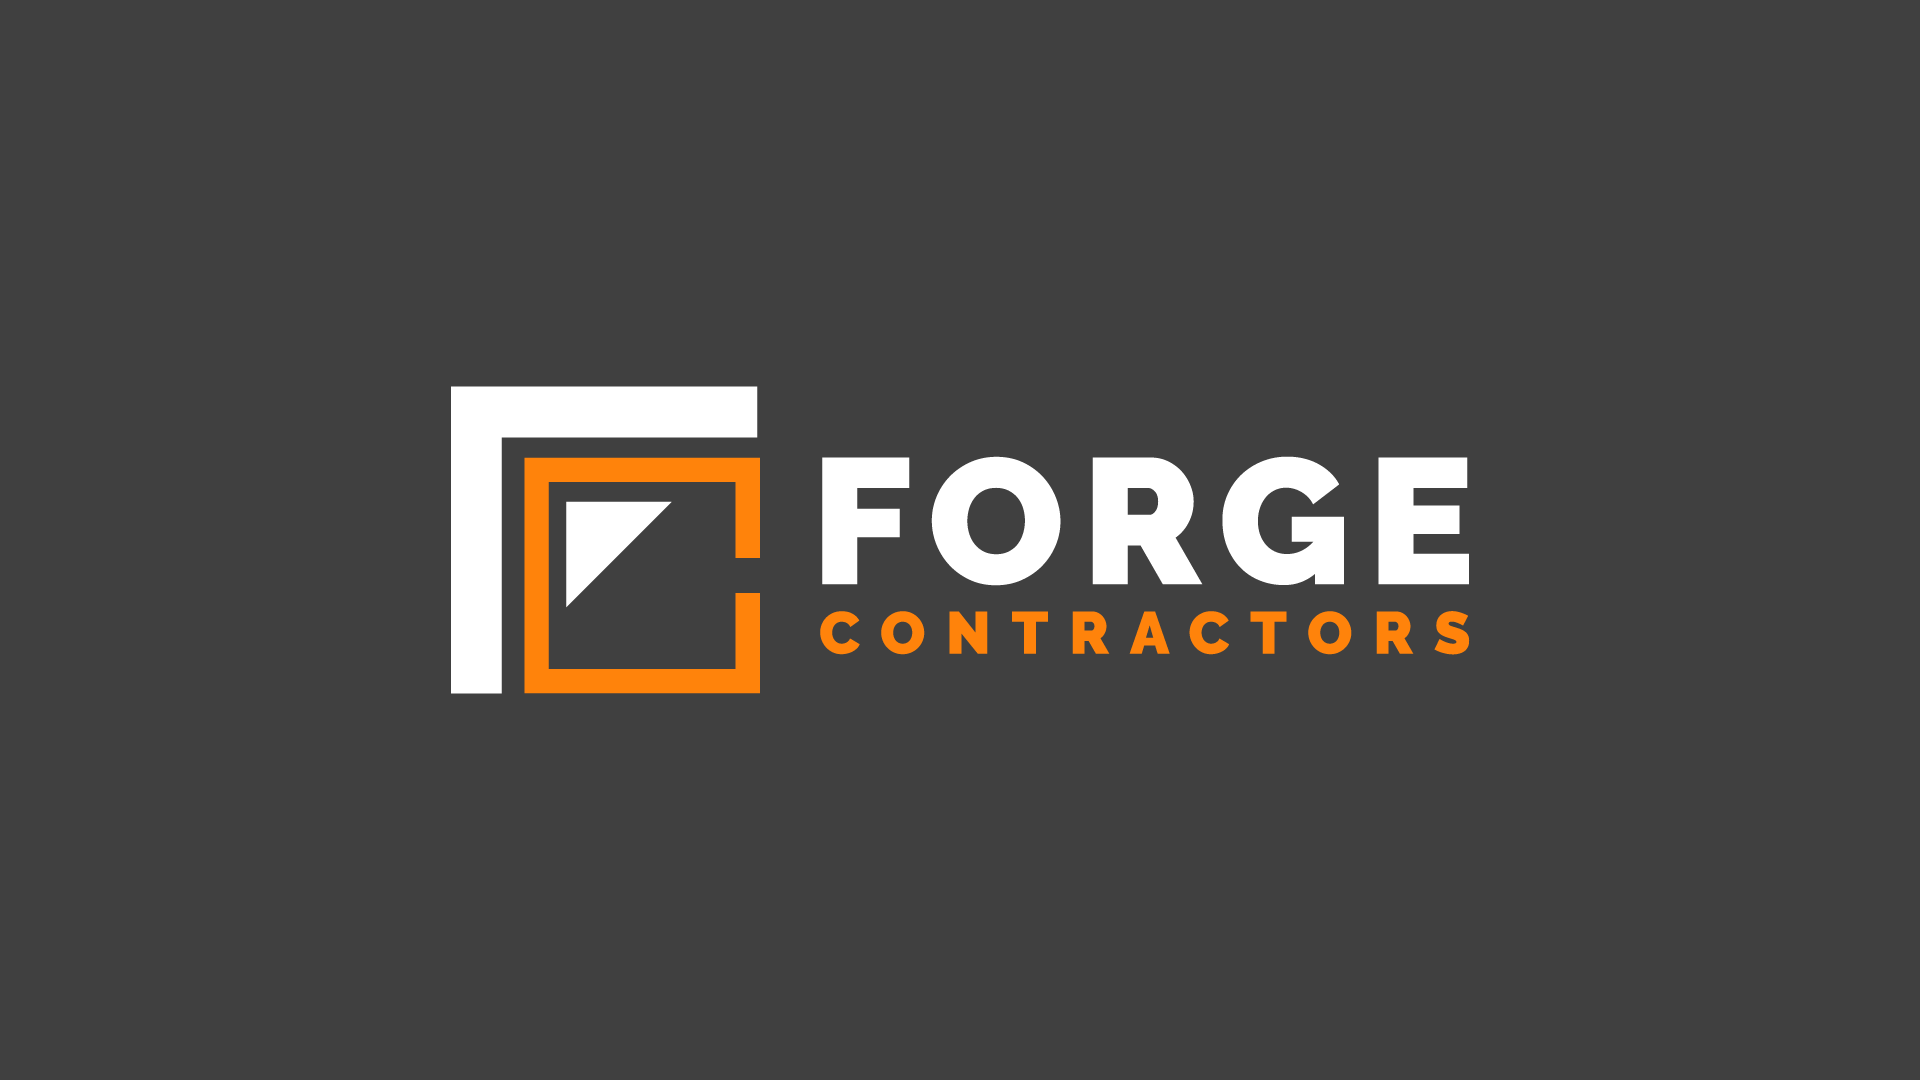 forge-contractors_logo-dark_1920x1080.png